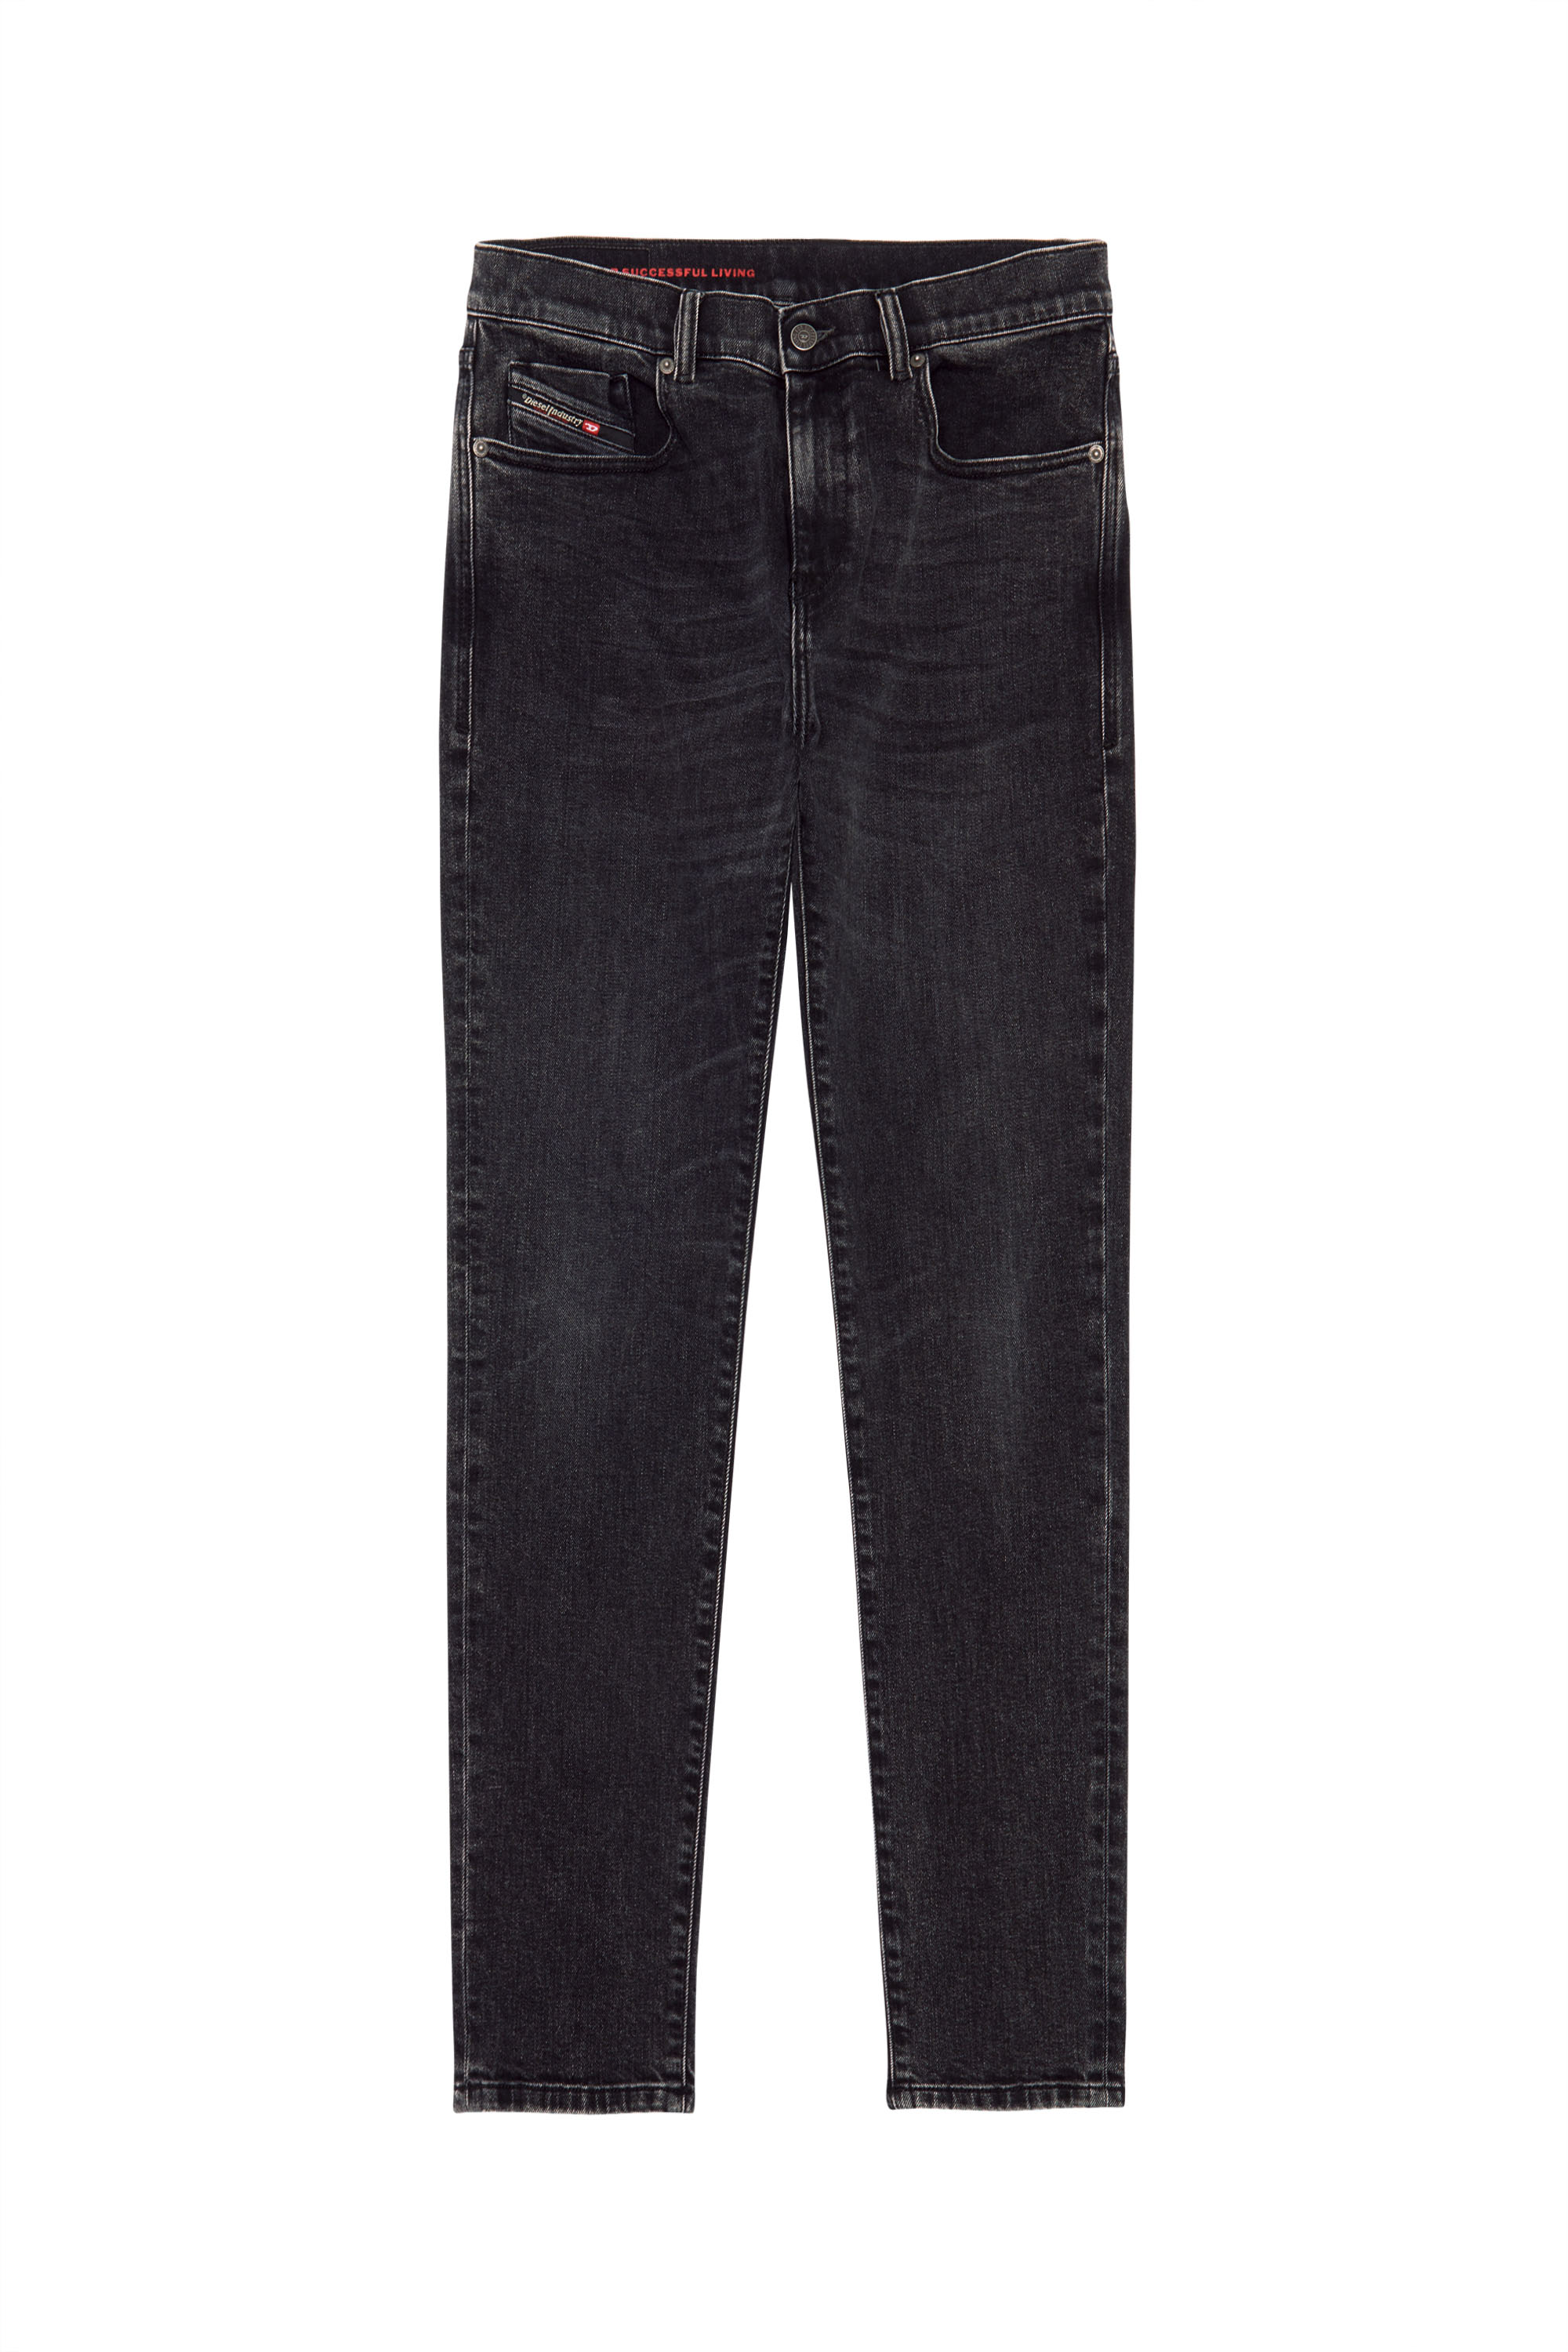 Slim Jeans 2019 D-Strukt 09B83, Schwarz/Dunkelgrau - Jeans